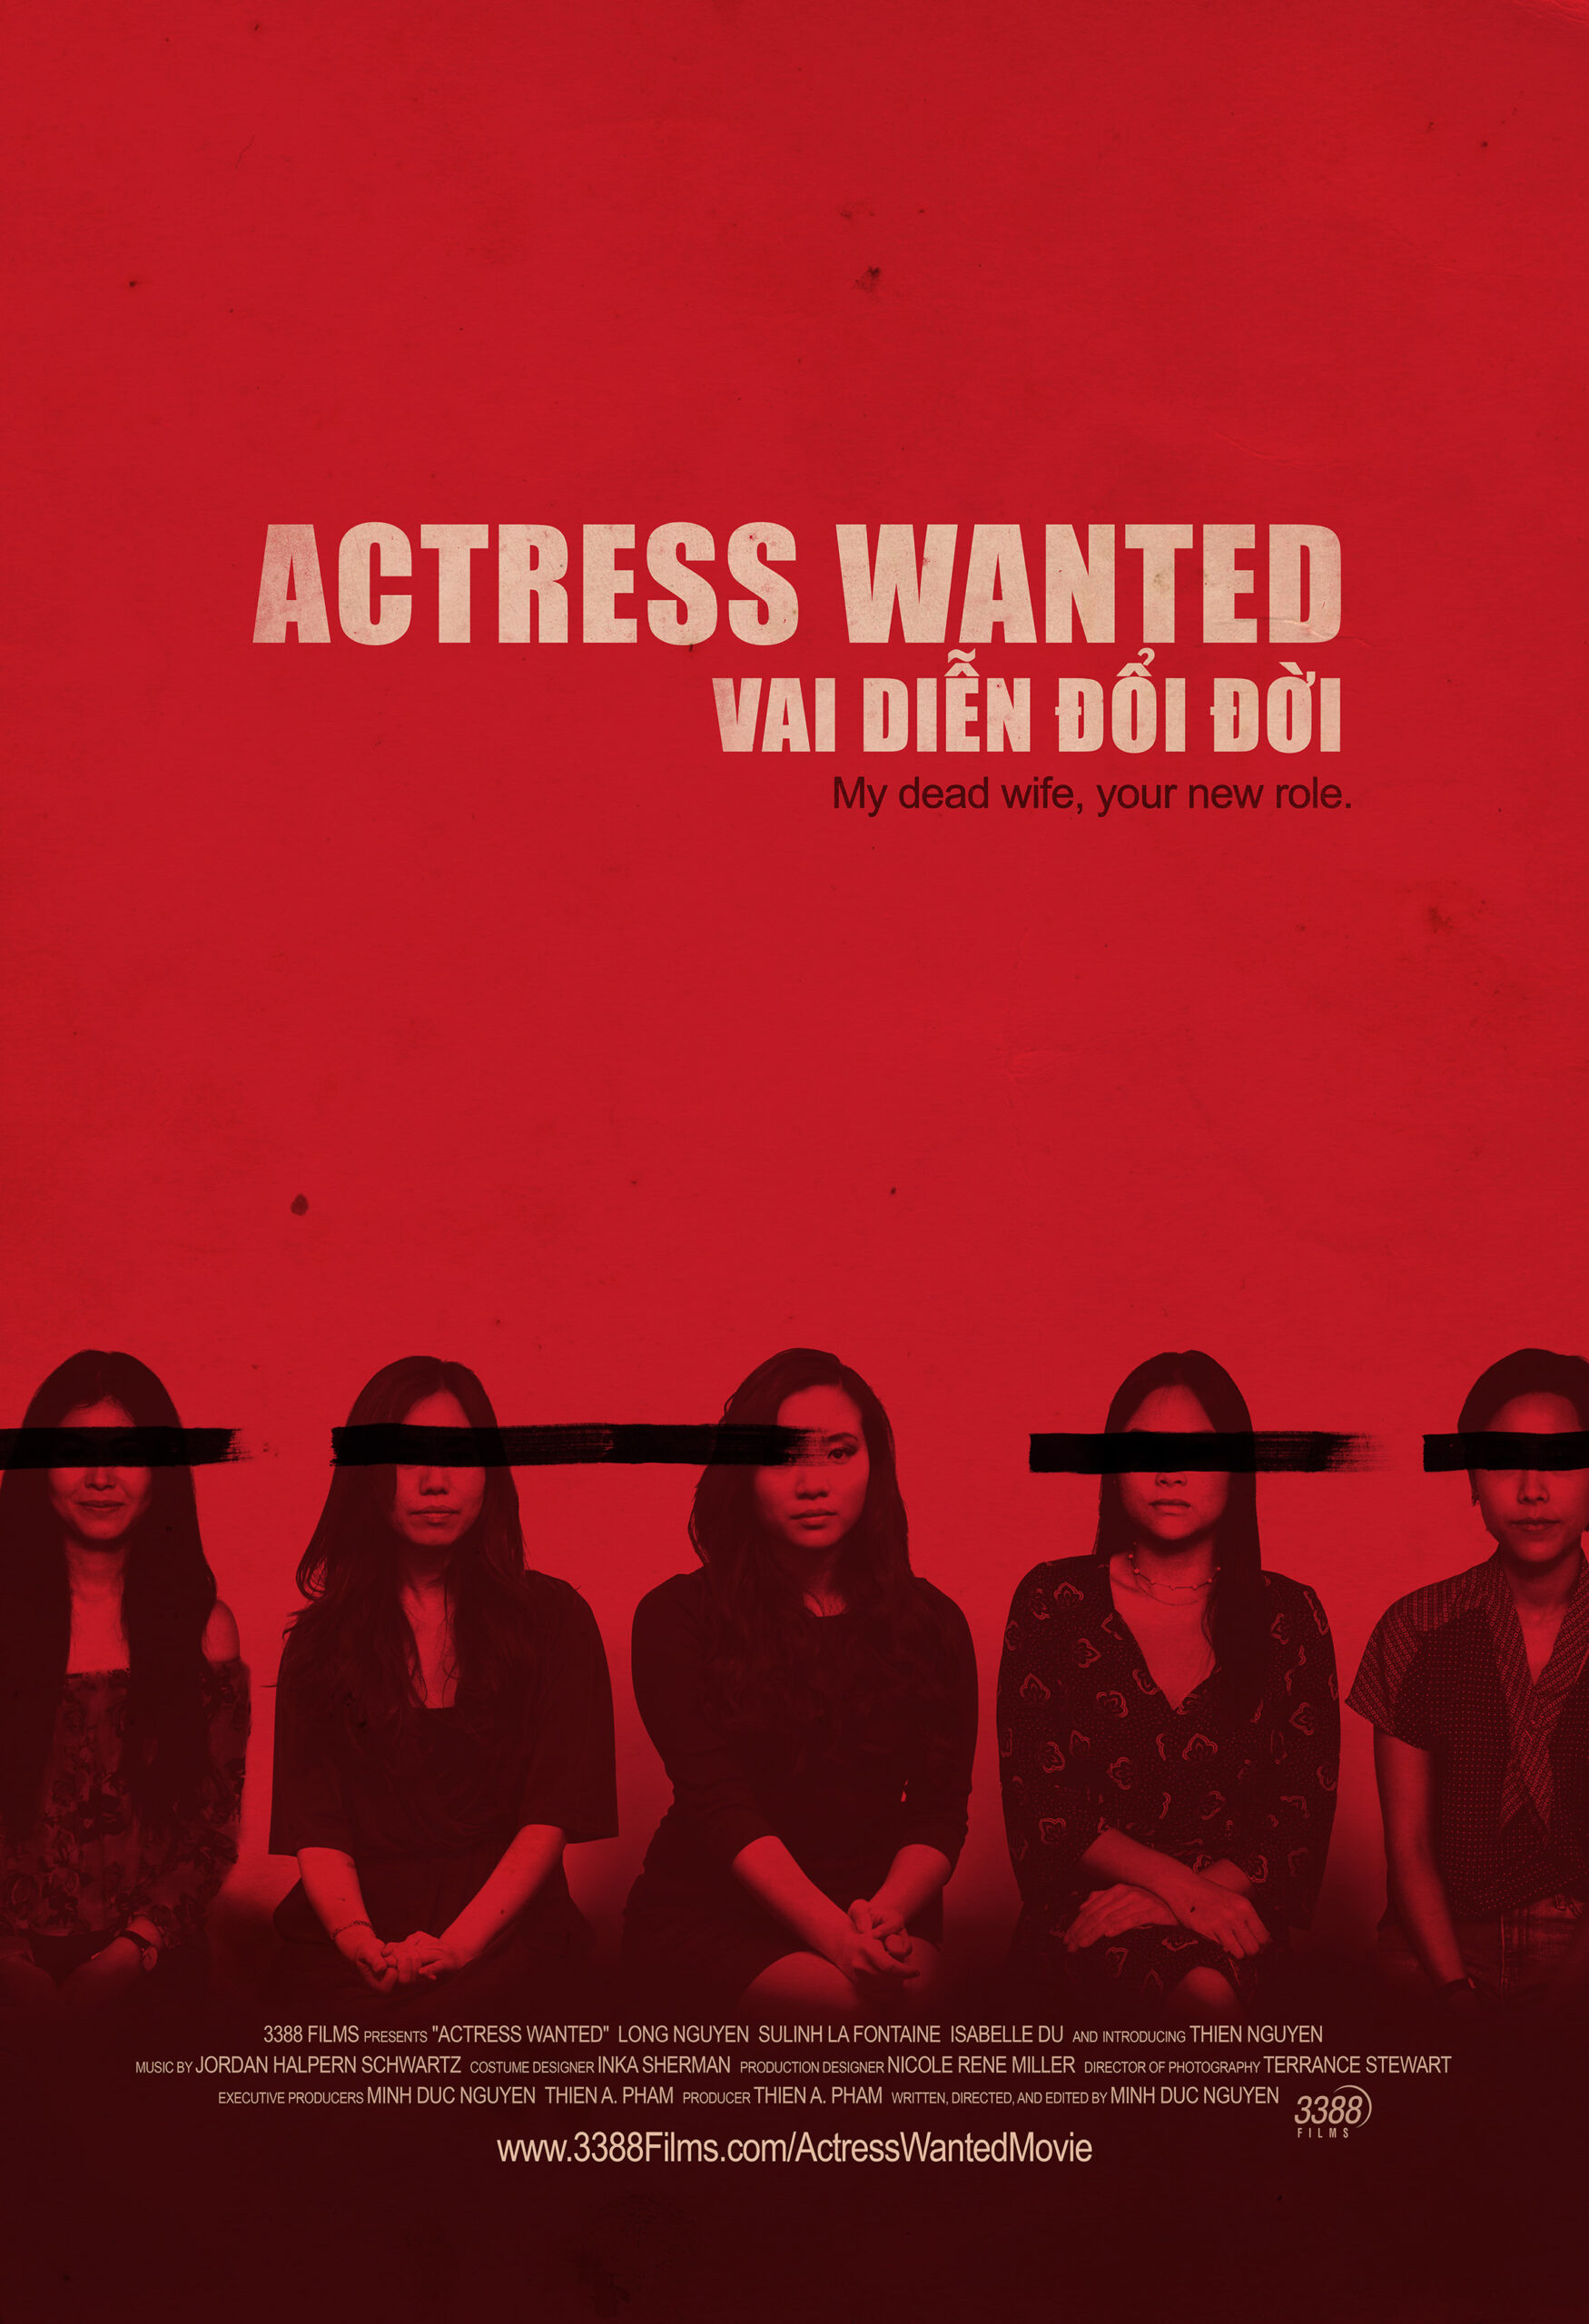 Actress Wanted (Vai Diễn Đổi Đời) Official Movie Poster